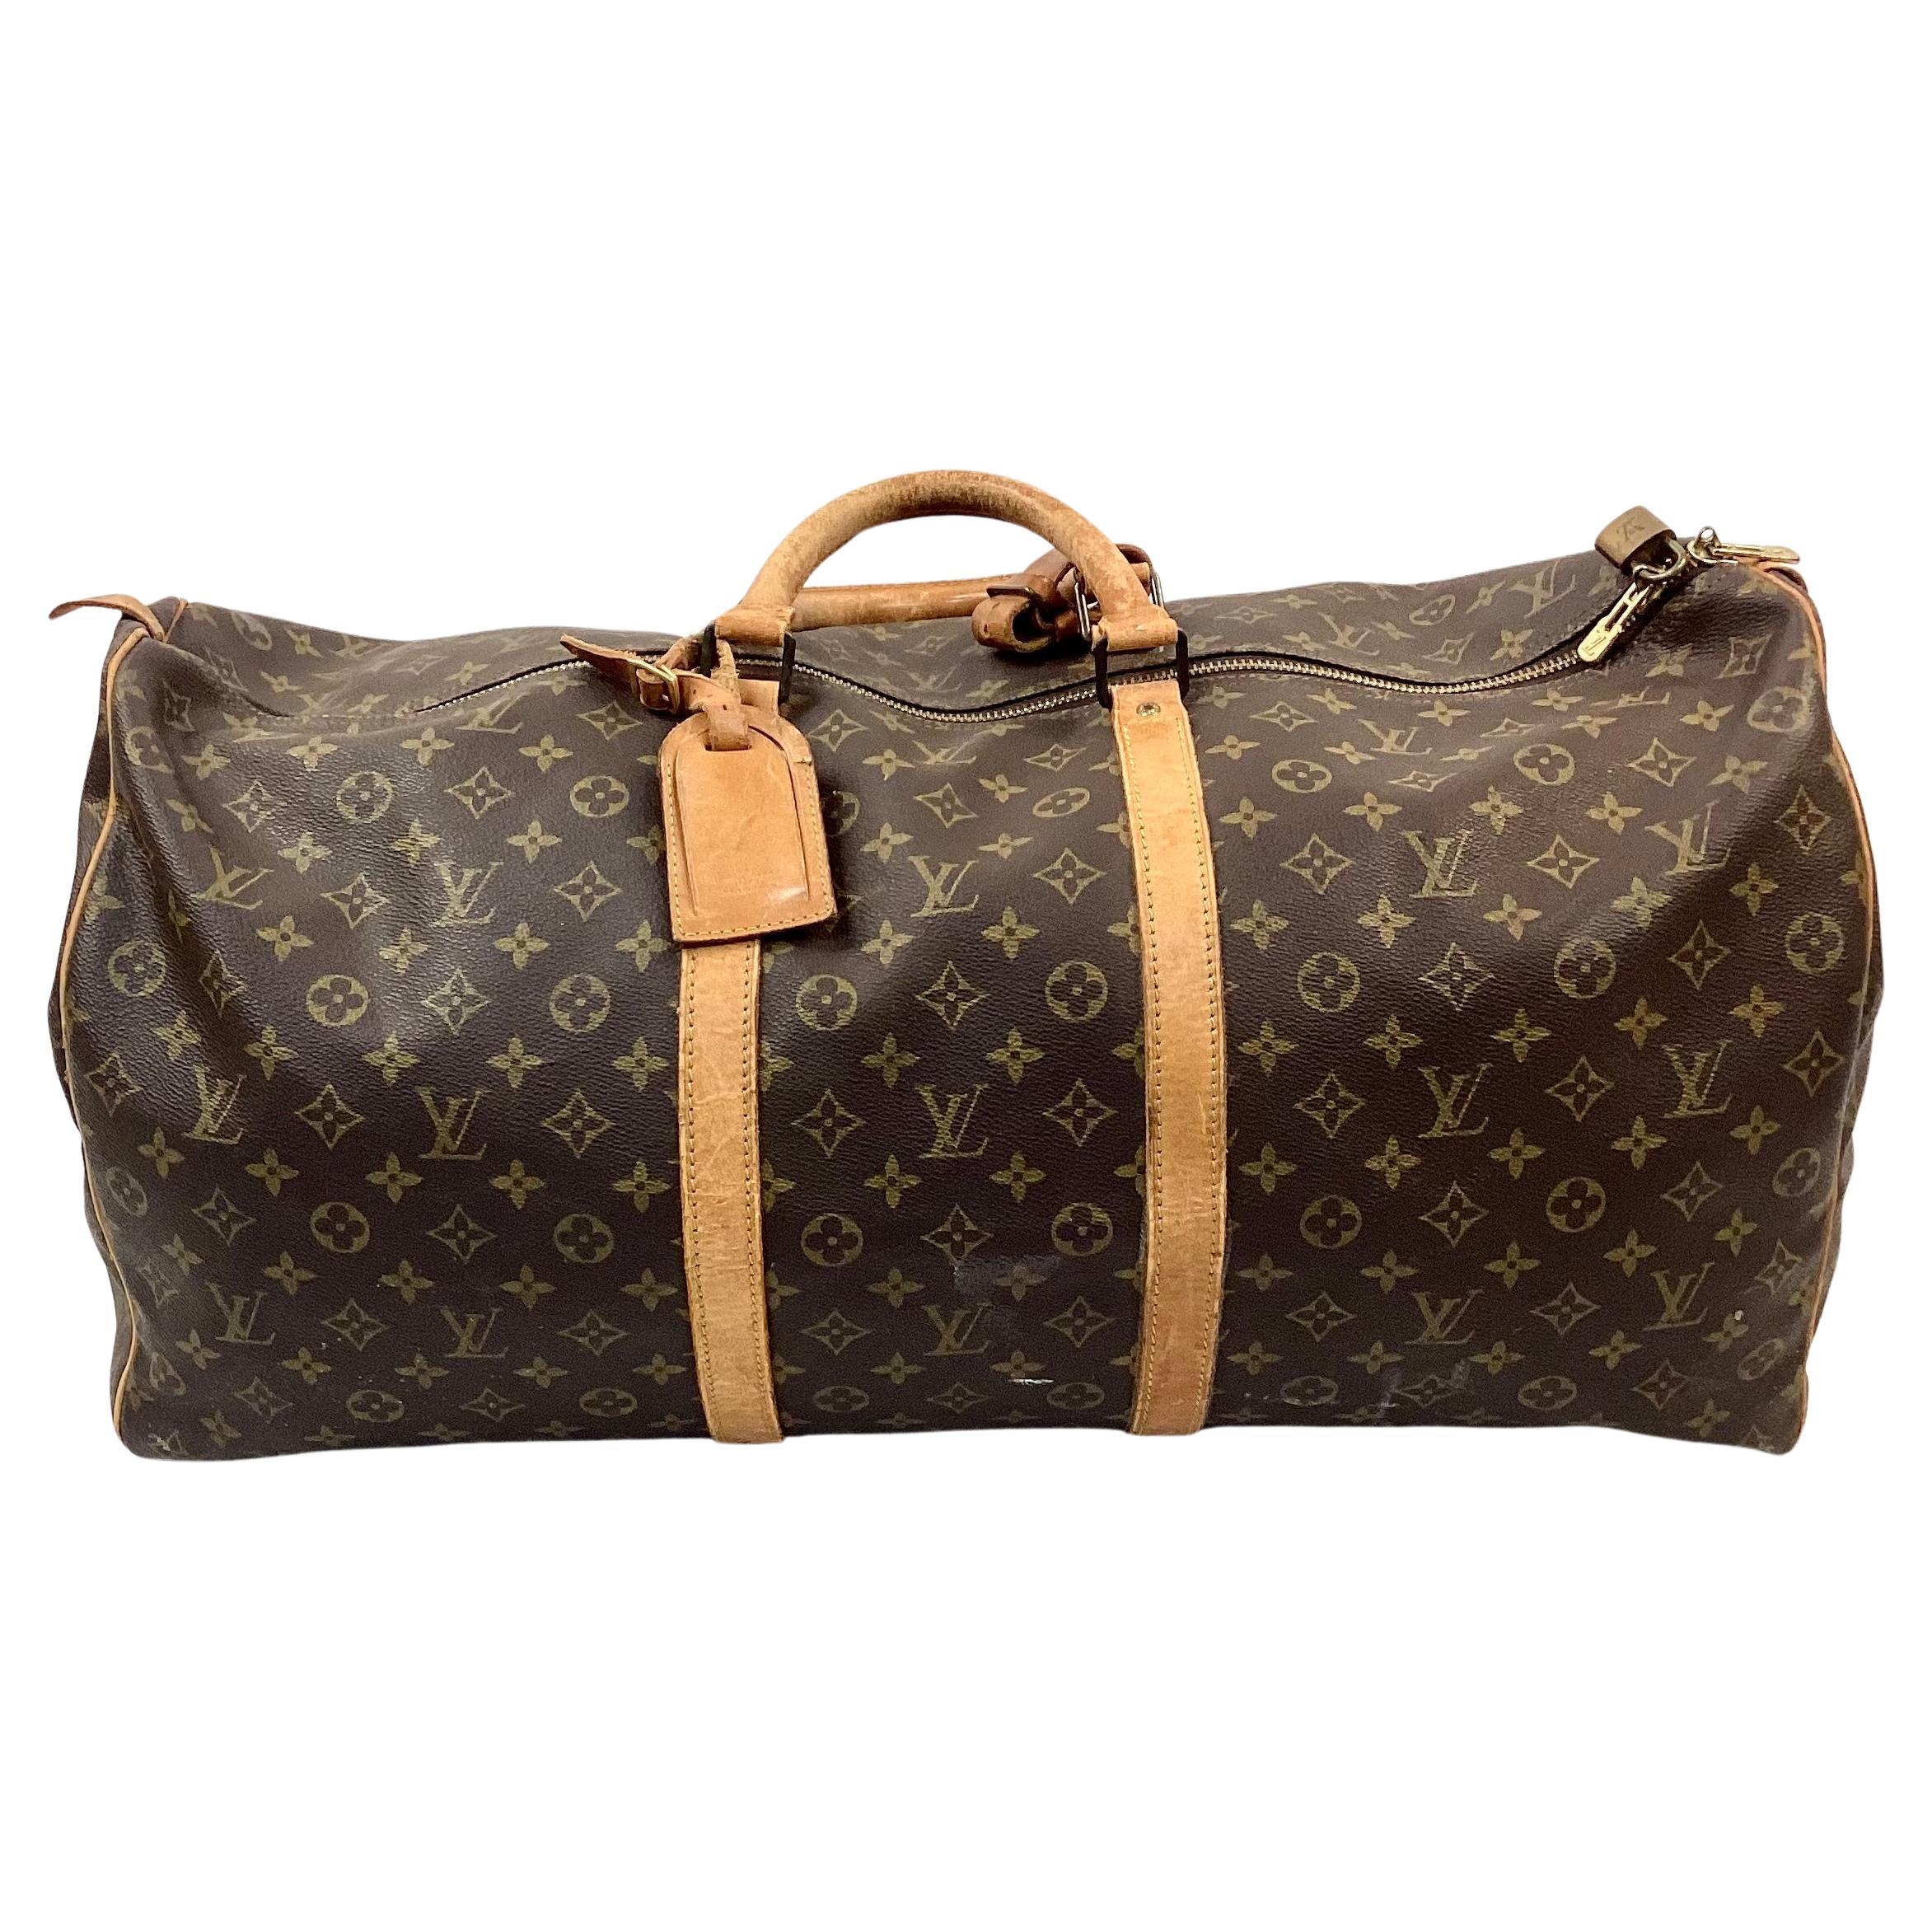 Louie Vuitton Monogram Keepall Travel  Bag